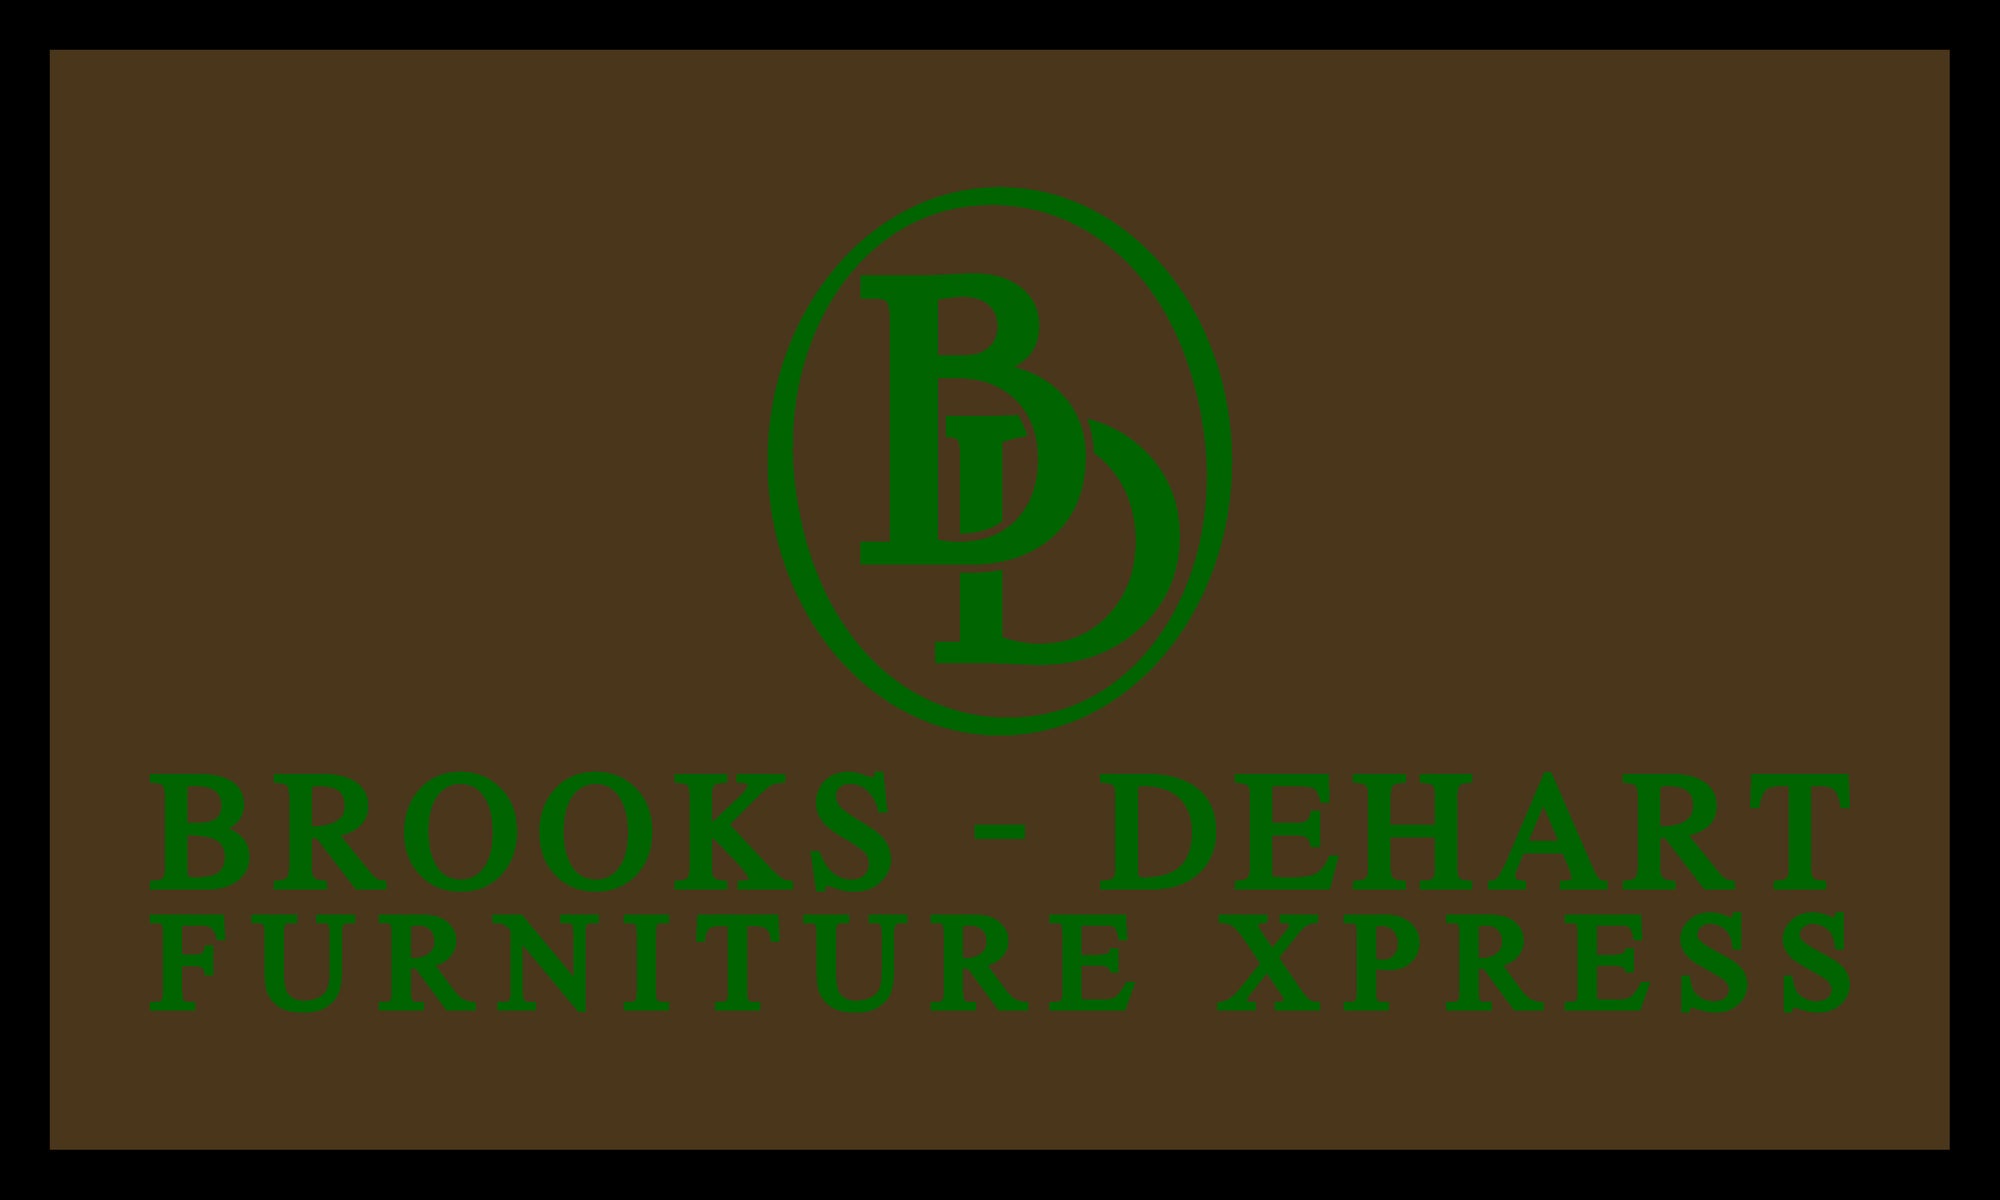 Brooks - Dehart 3 X 5 Luxury Berber Inlay - The Personalized Doormats Company